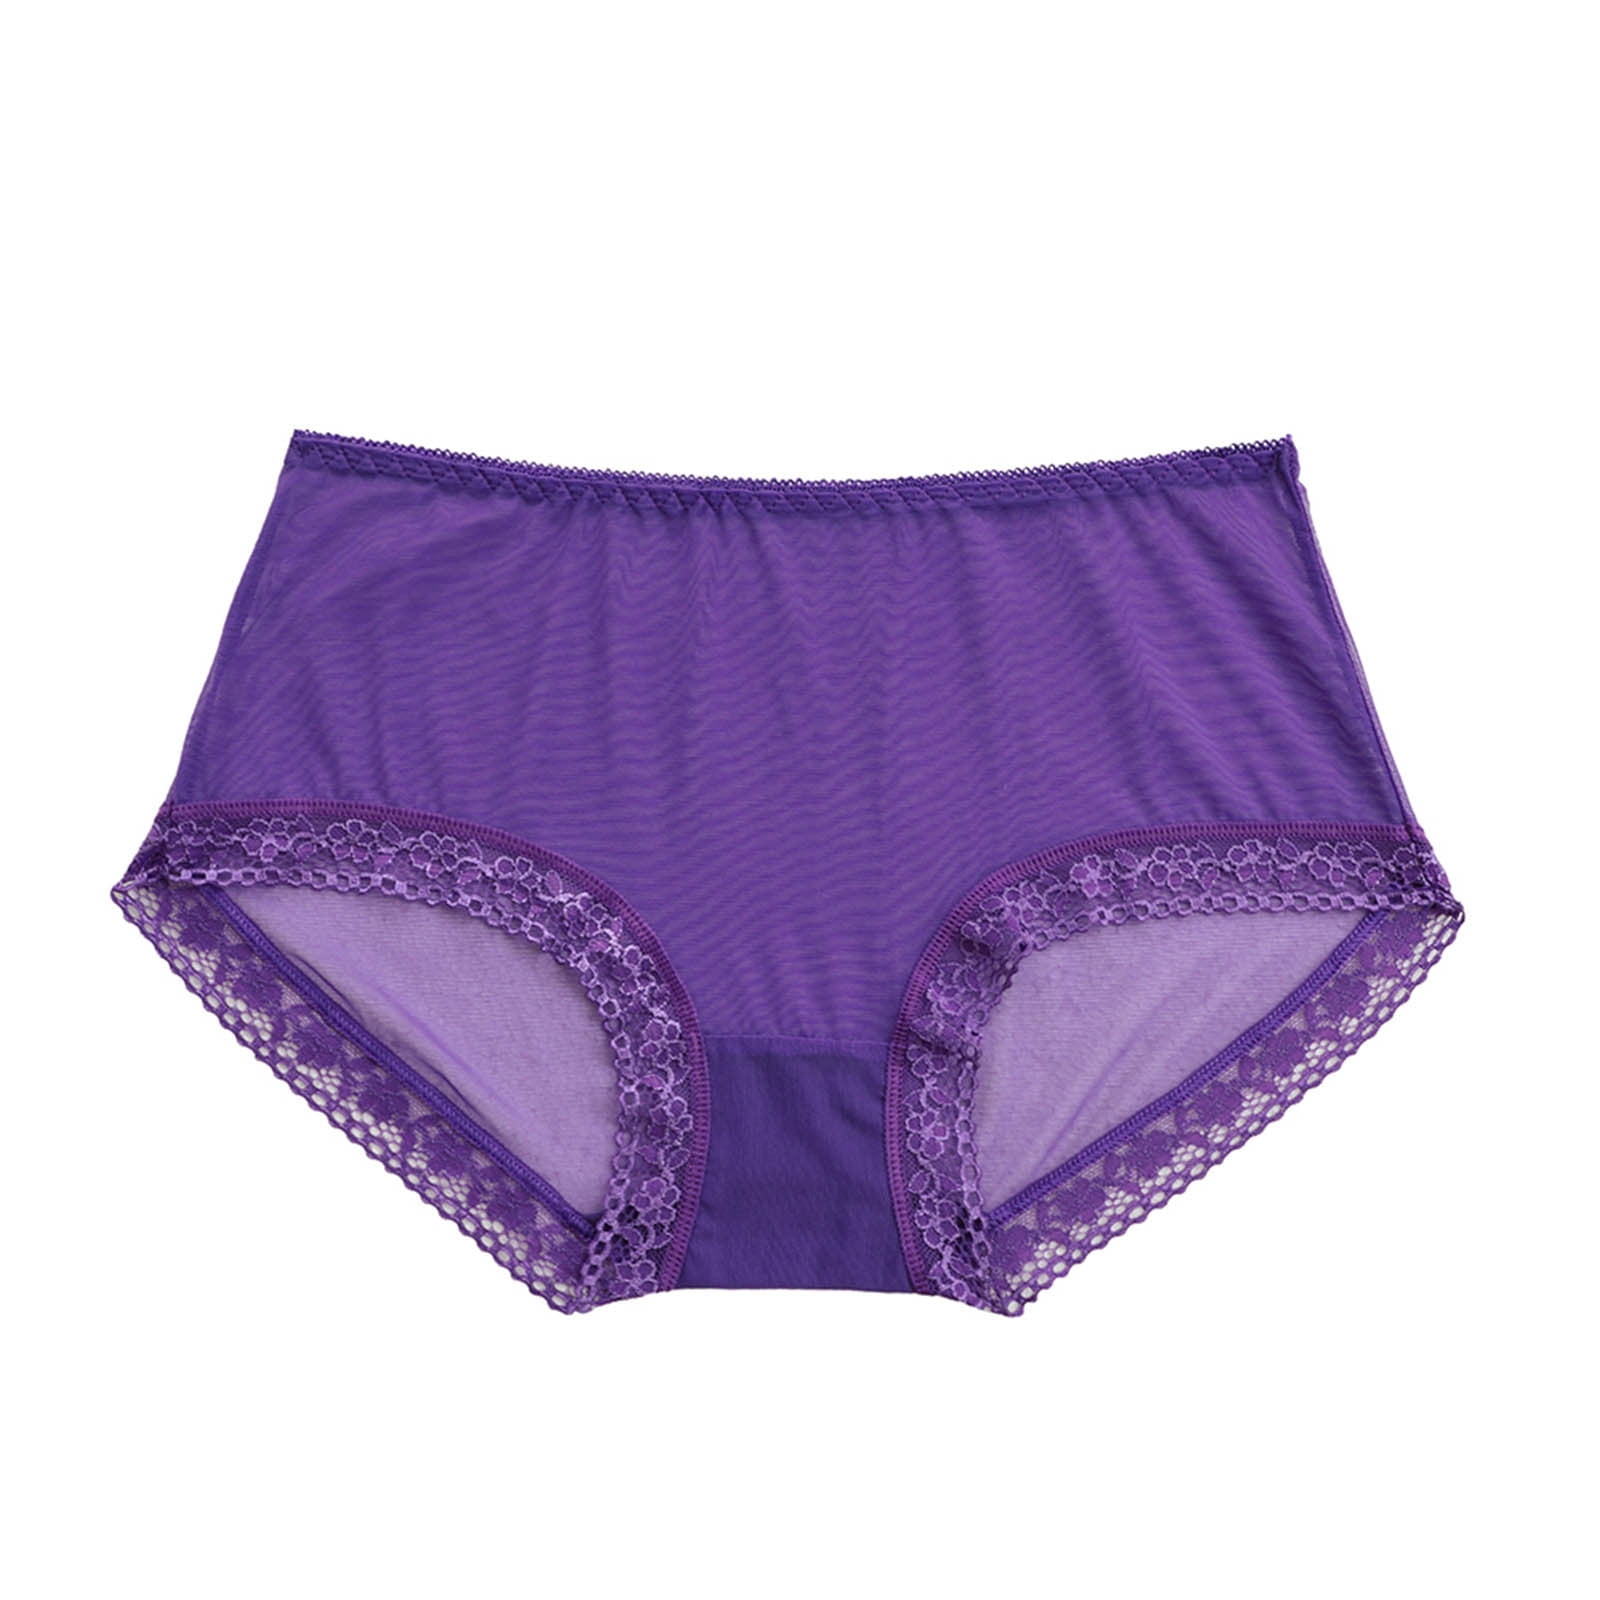 dmqupv Womens Panties Pack Briefs Underwear for Women Mid Waist Cotton ...